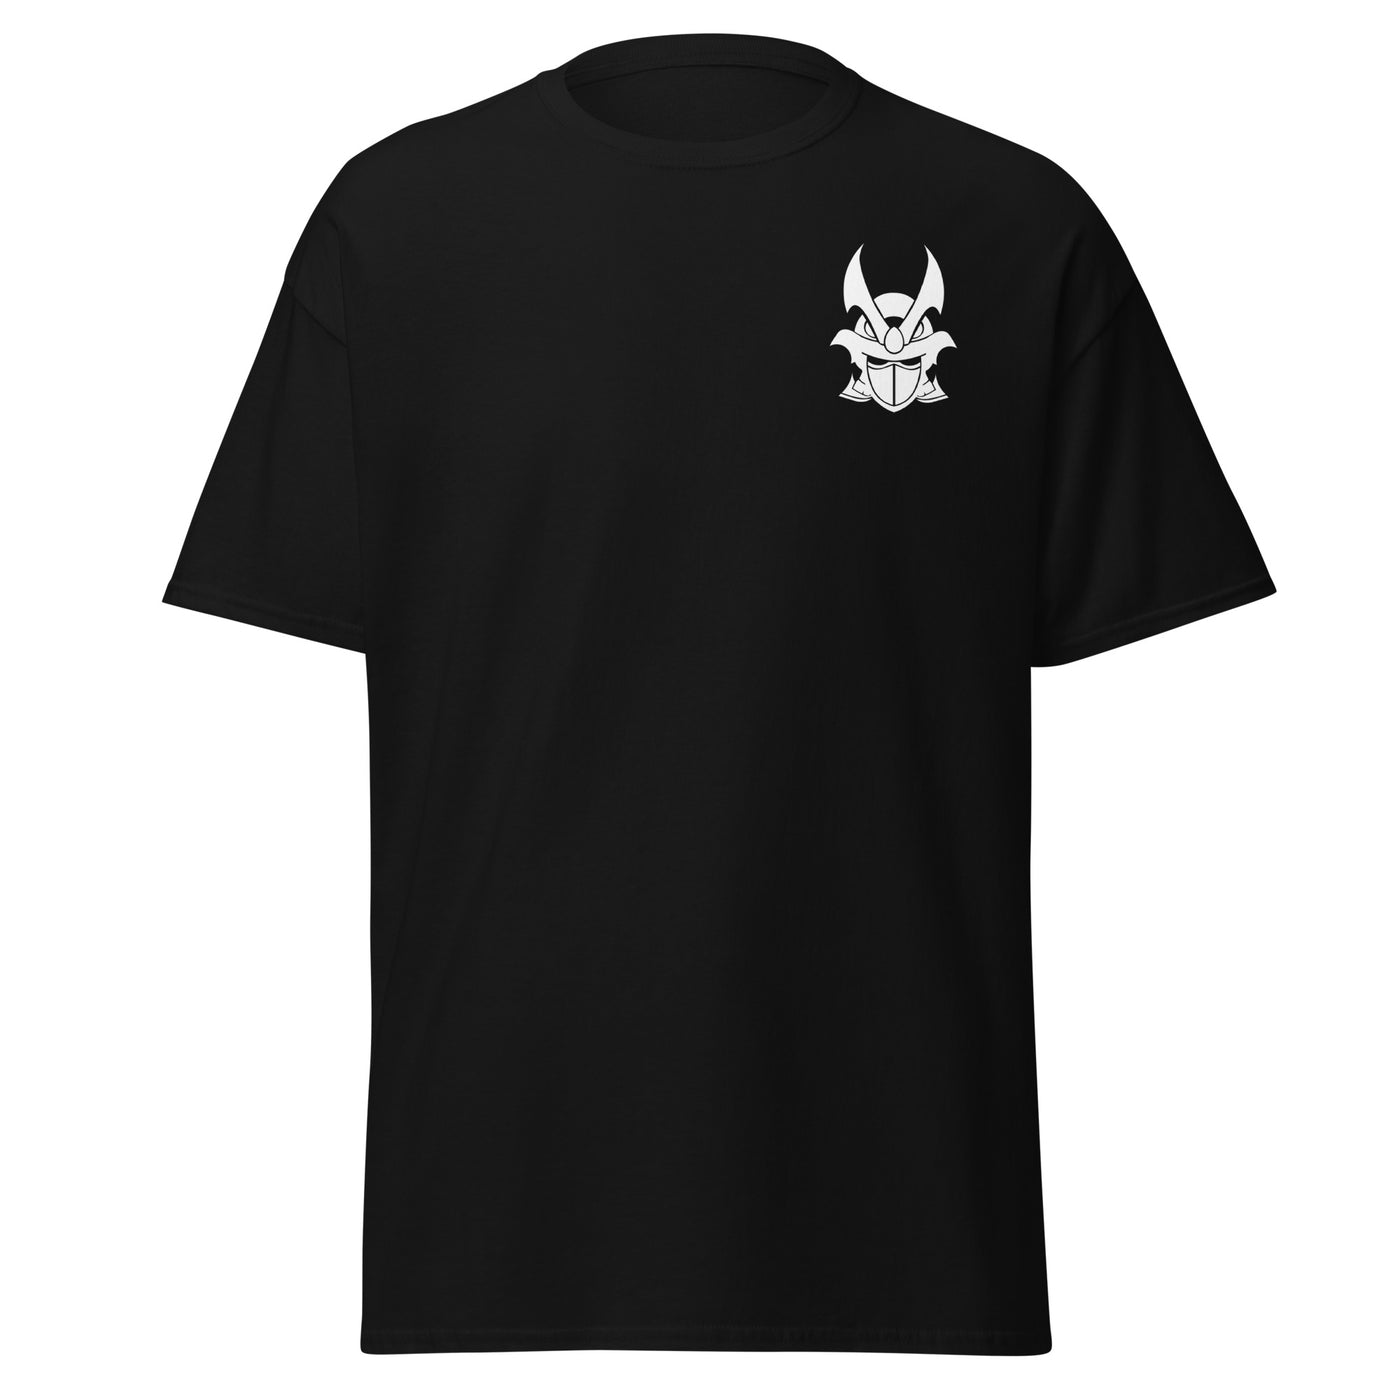 Mortal Esports Unisex T-Shirt